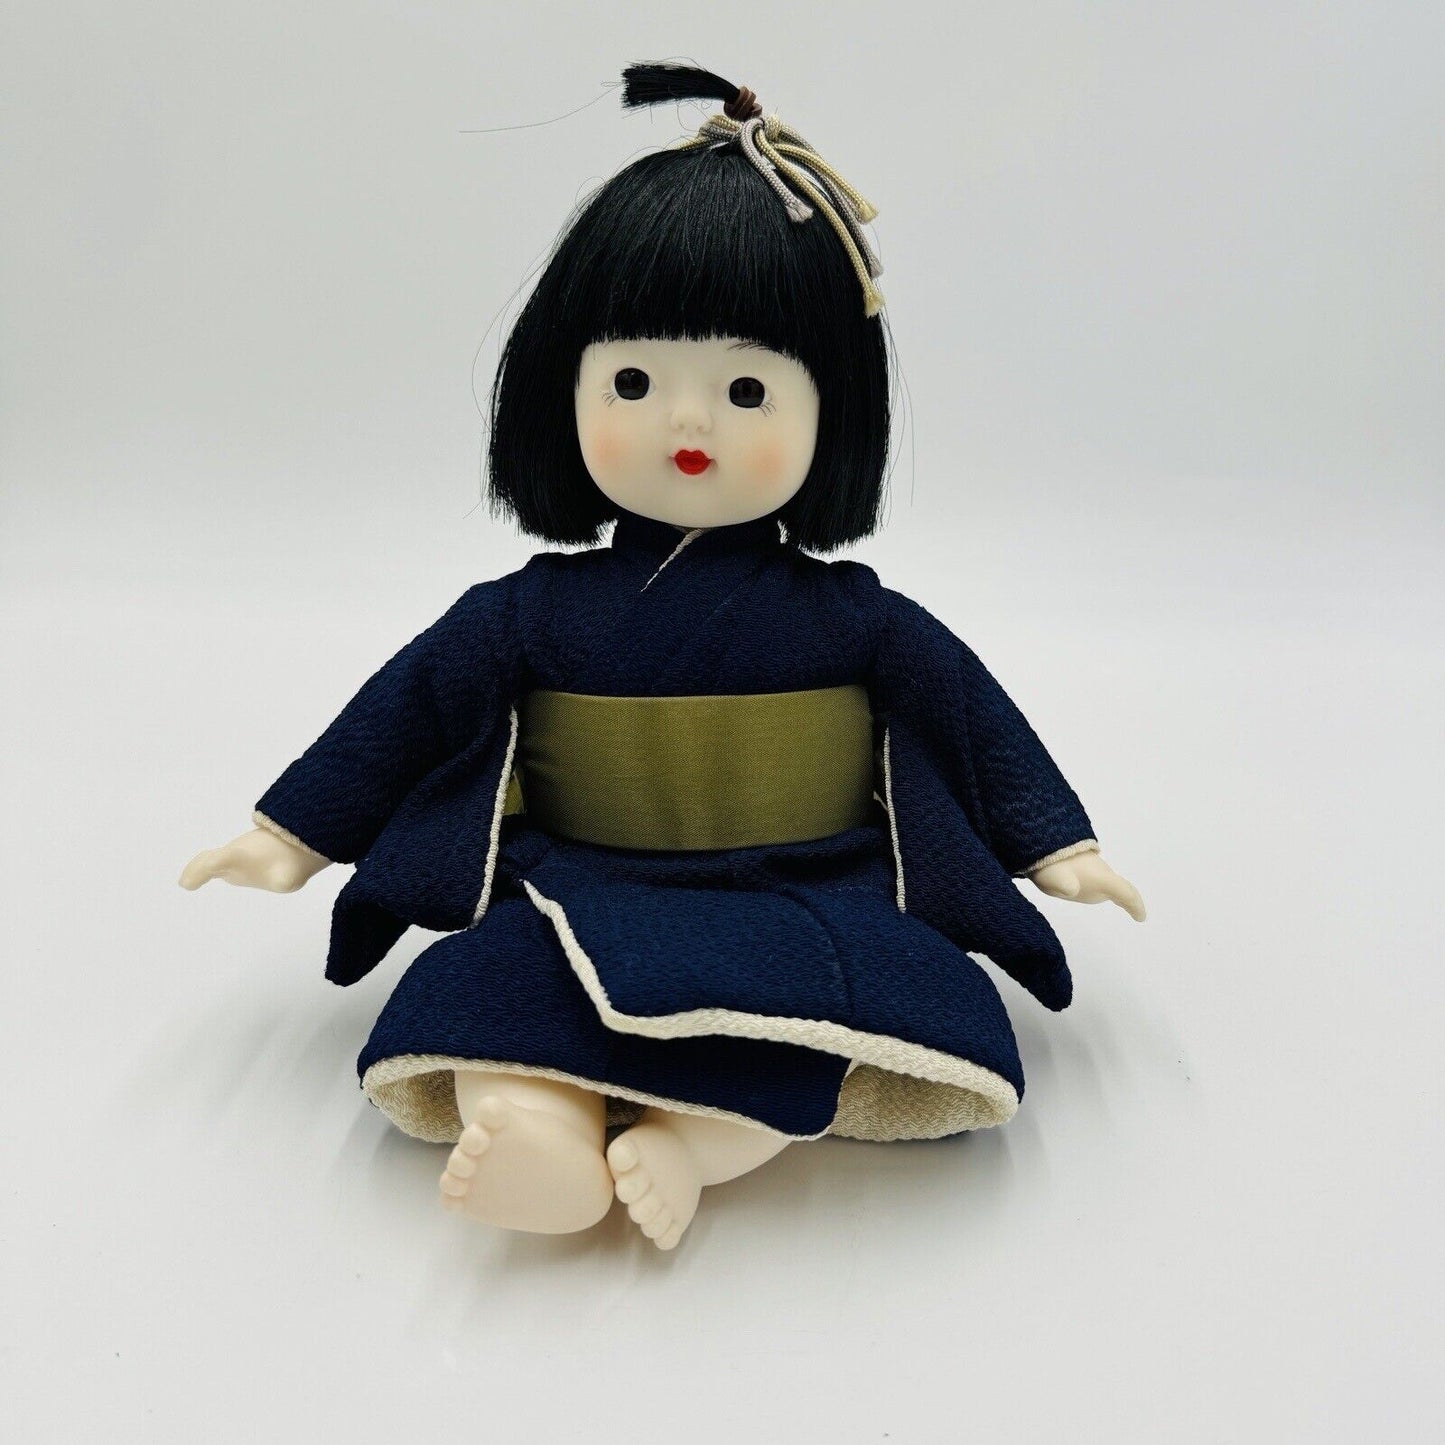 Ooike Oike Co. Ltd. Kyo Osana Navy Blue Japanese Vinyl Doll Traditional Toy